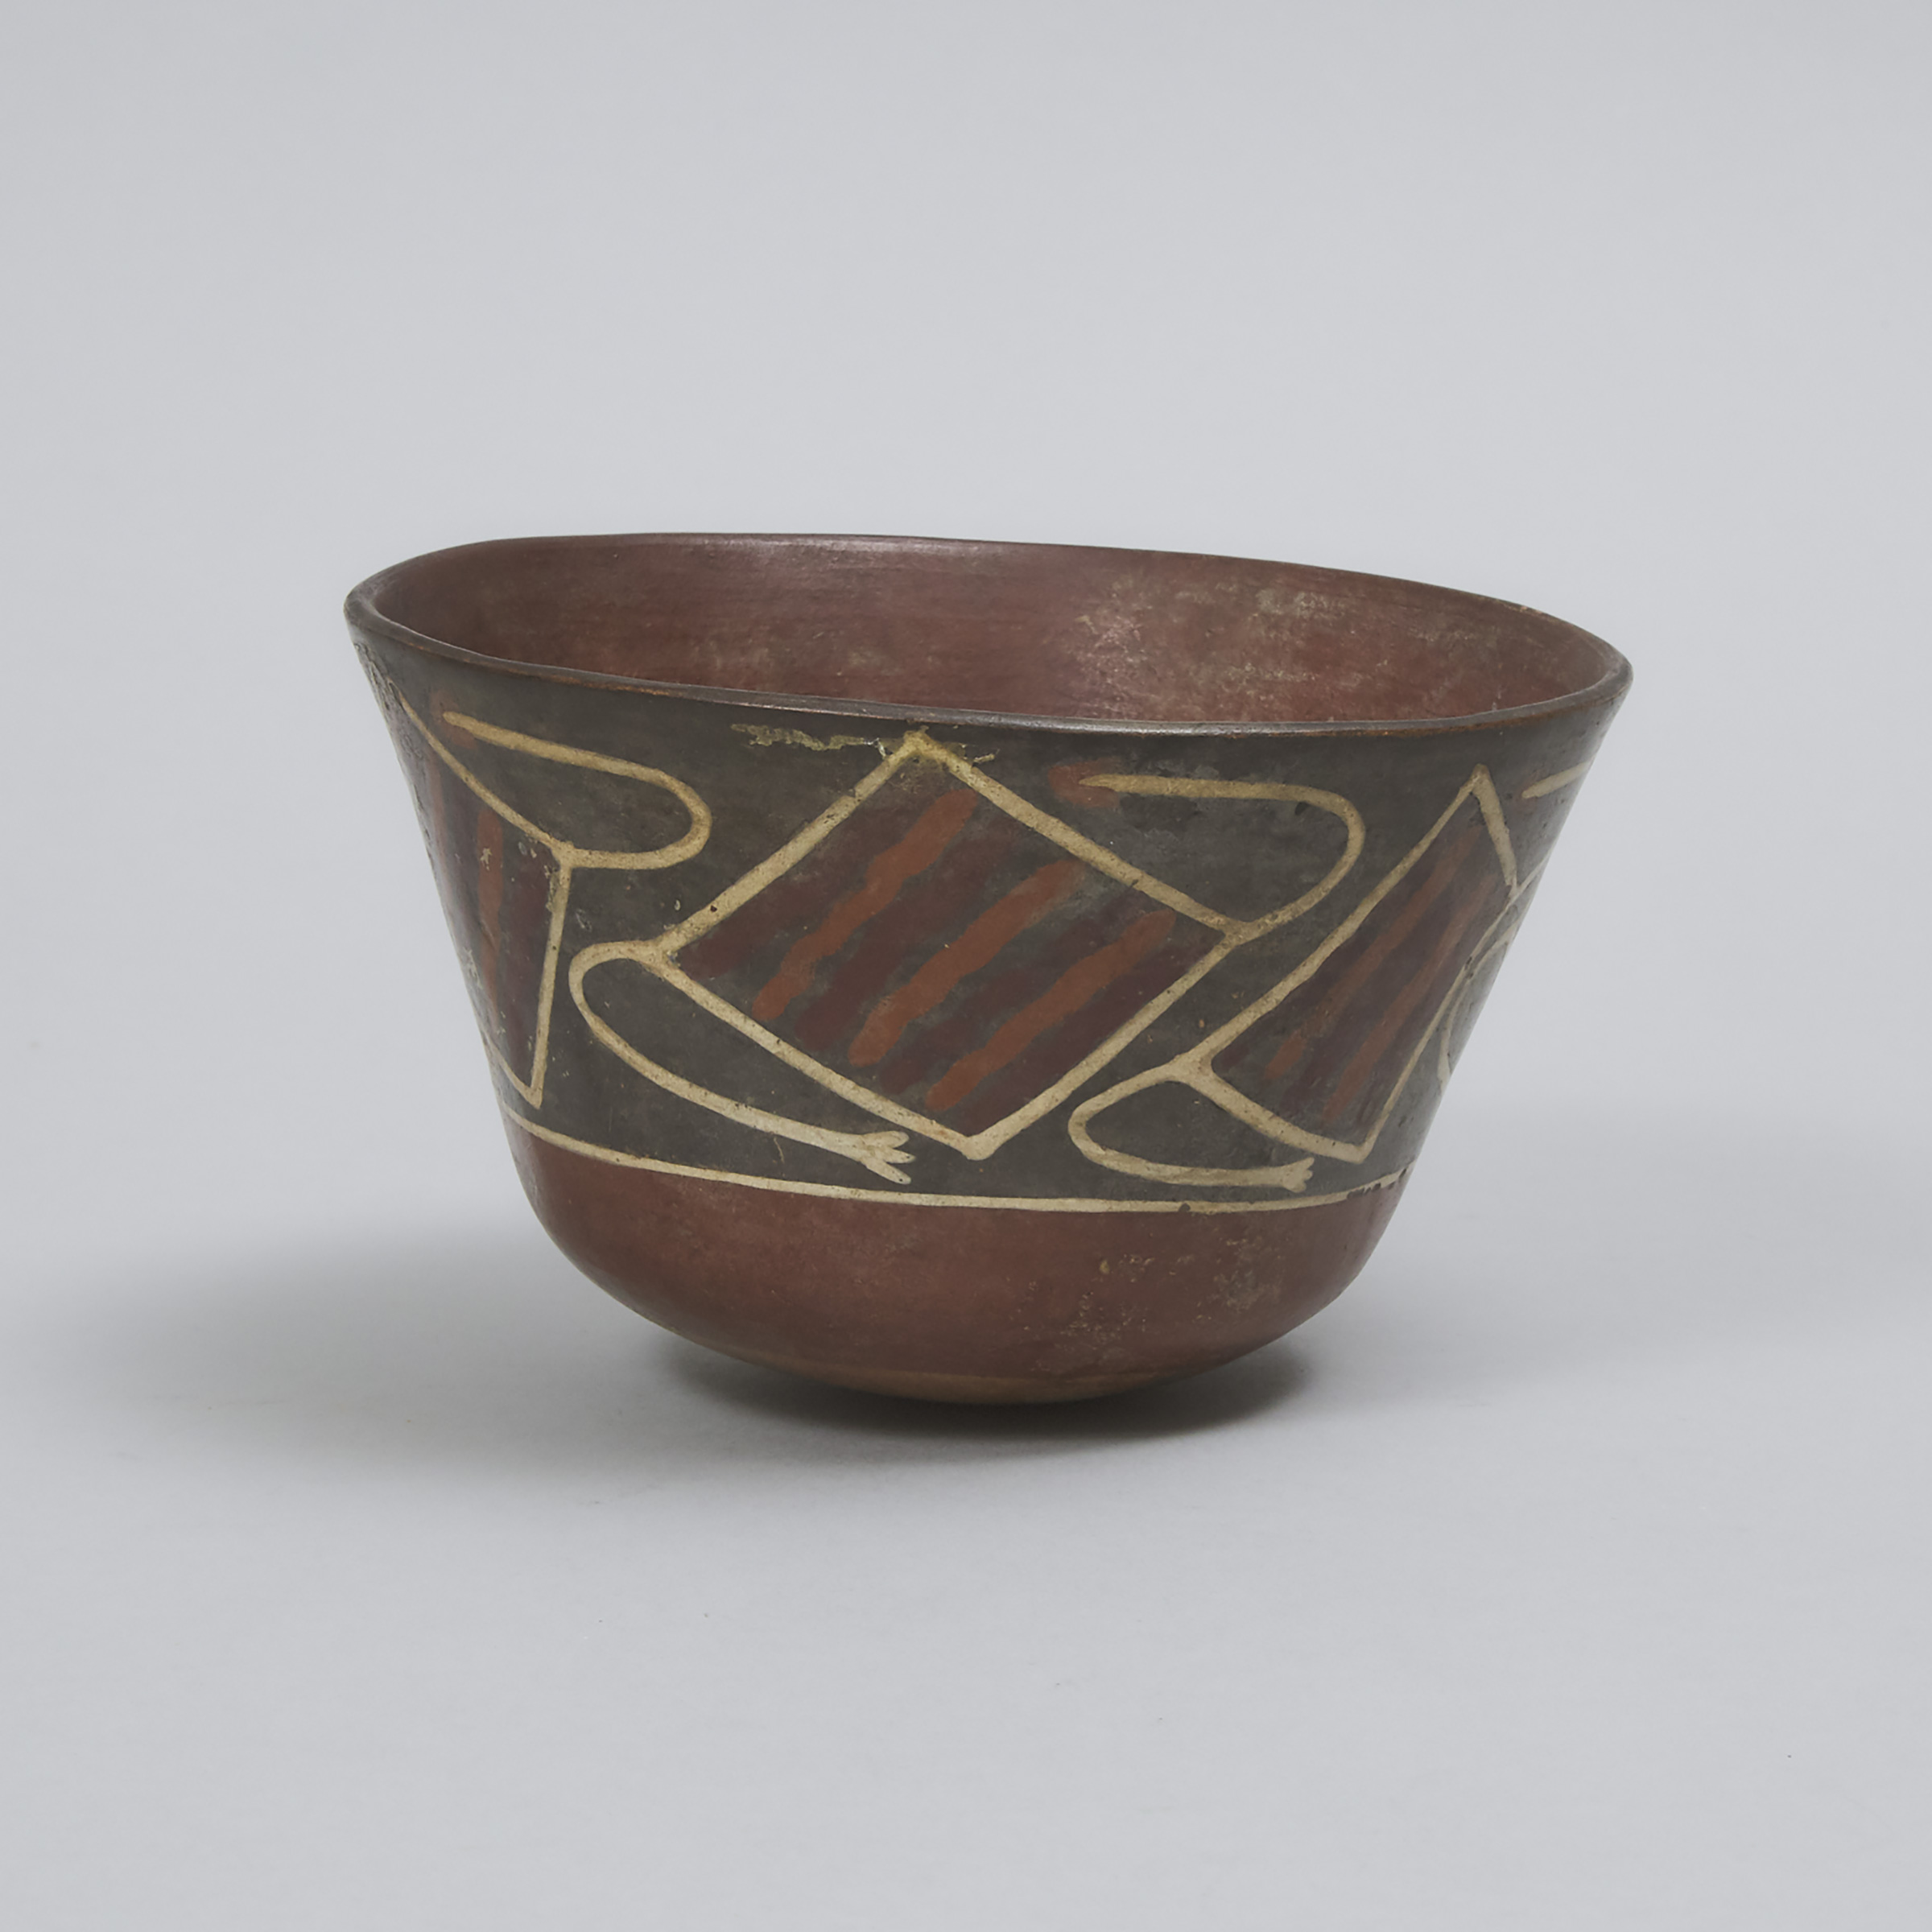 Nazca Polychromed Redware Pottery Bowl, Peru, 200-400 A.D.